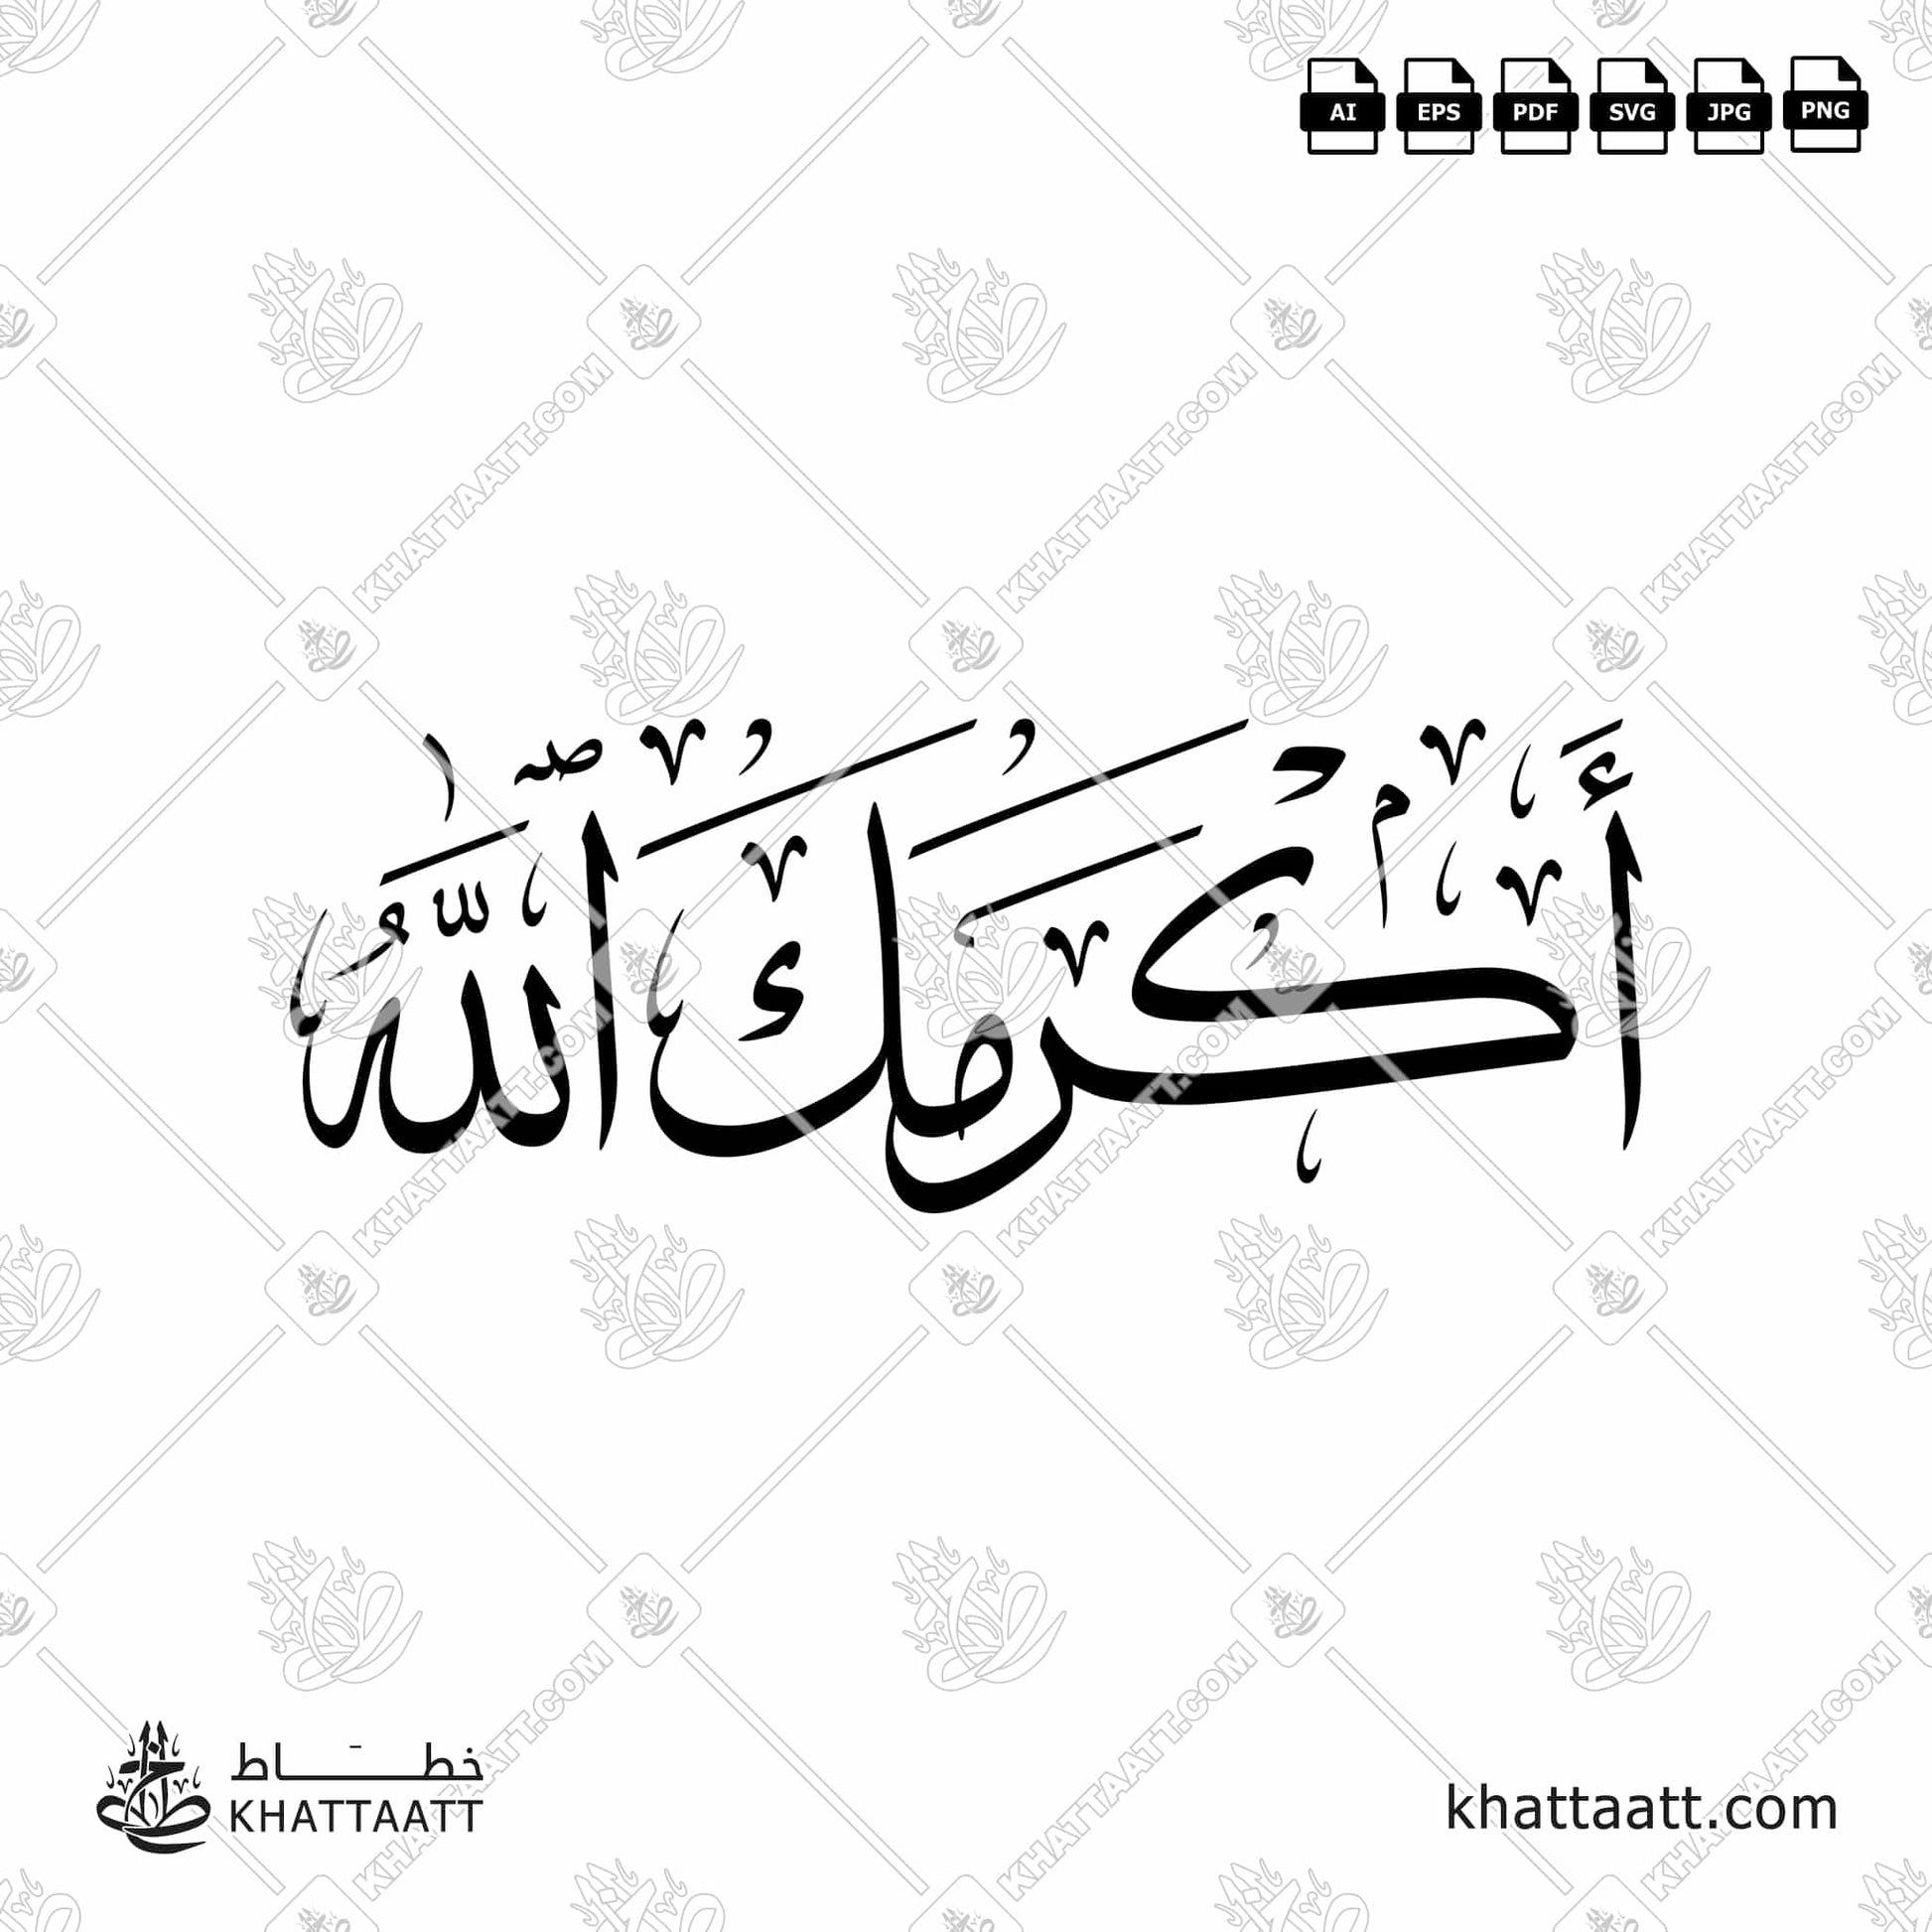 Arabic Calligraphy of Akramak Allahu أكرمك الله , in Thuluth script خط الثلث.